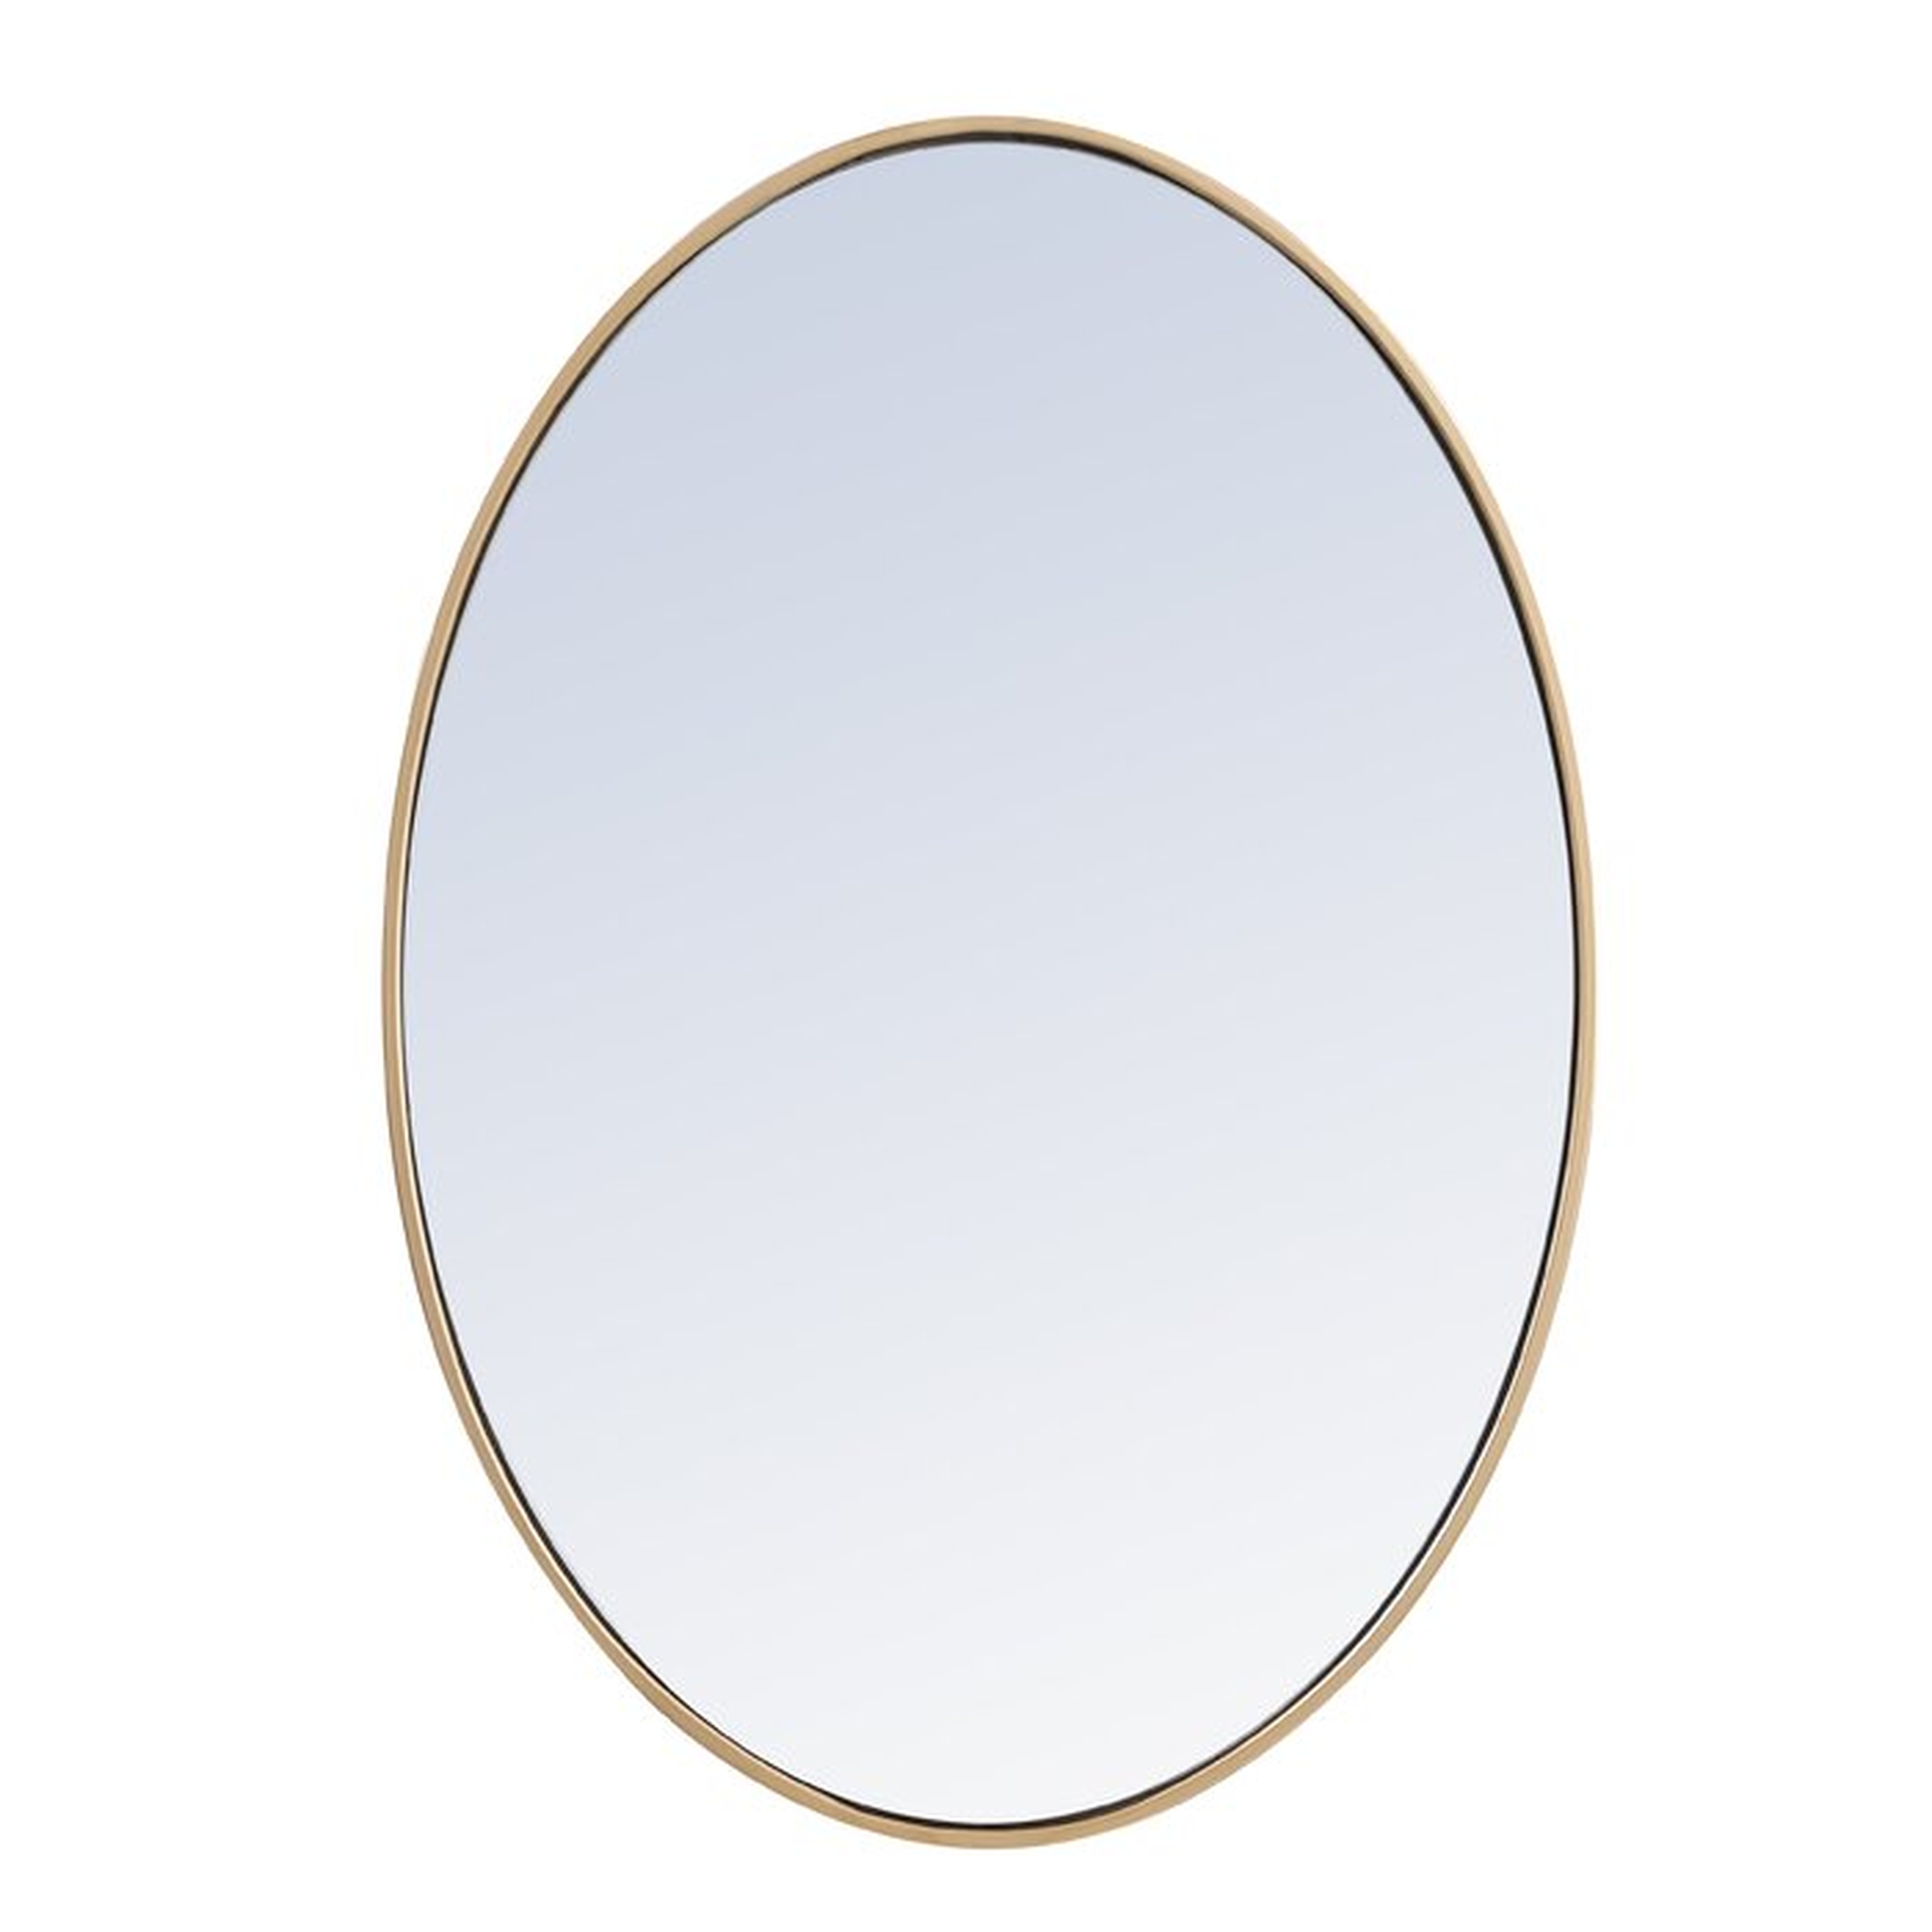 Hooten Metal Oval Beveled Accent Mirror - Wayfair